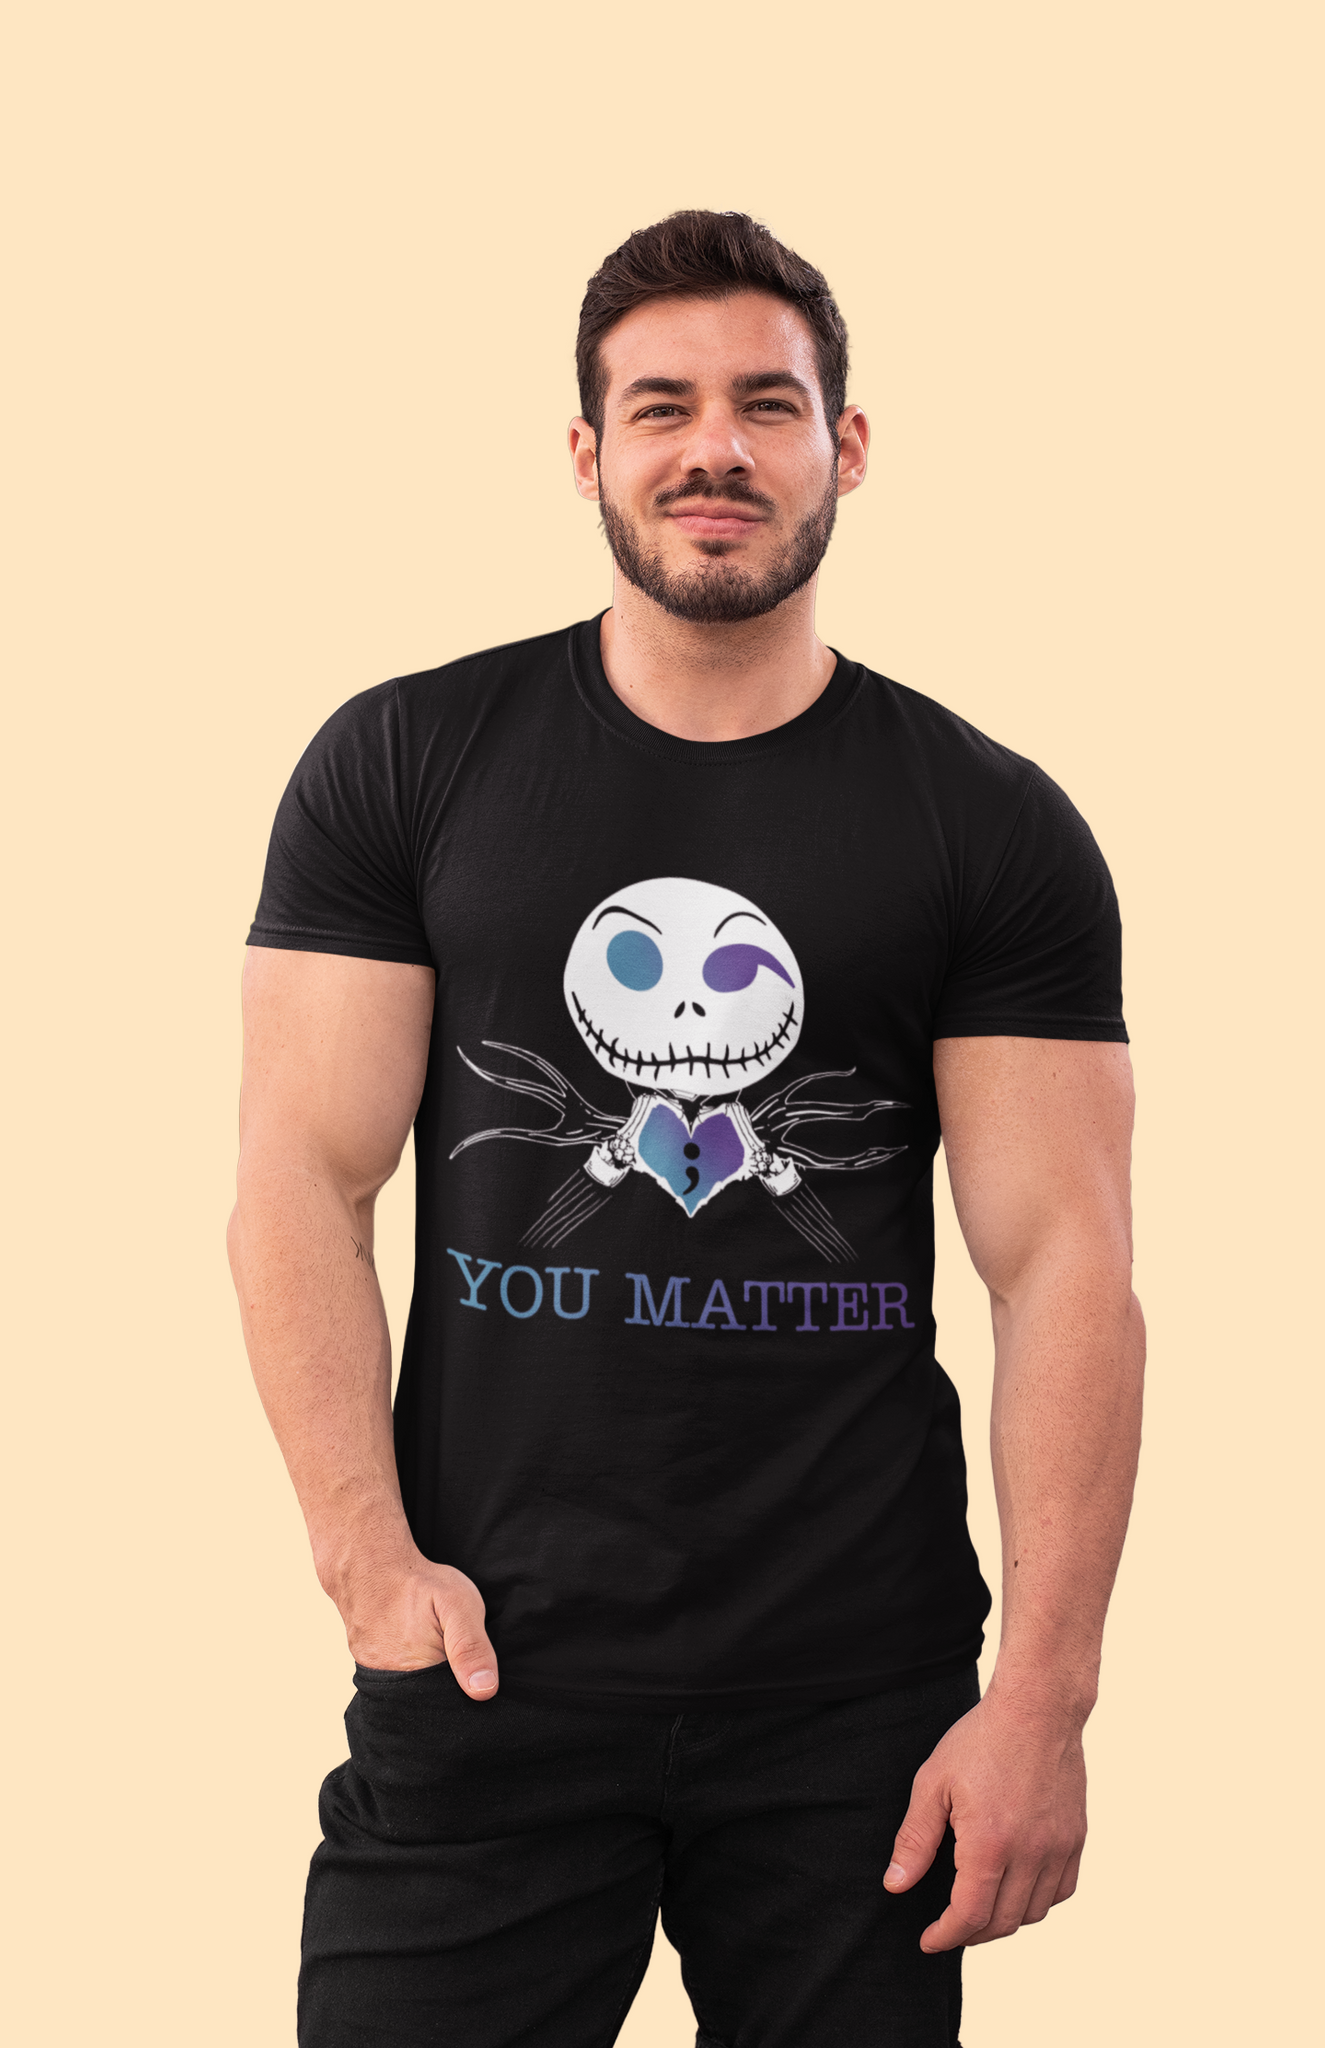 Nightmare Before Christmas T Shirt, You Matter Shirt, Jack Skellington T Shirt, Suicide Prevention Awareness Tshirt